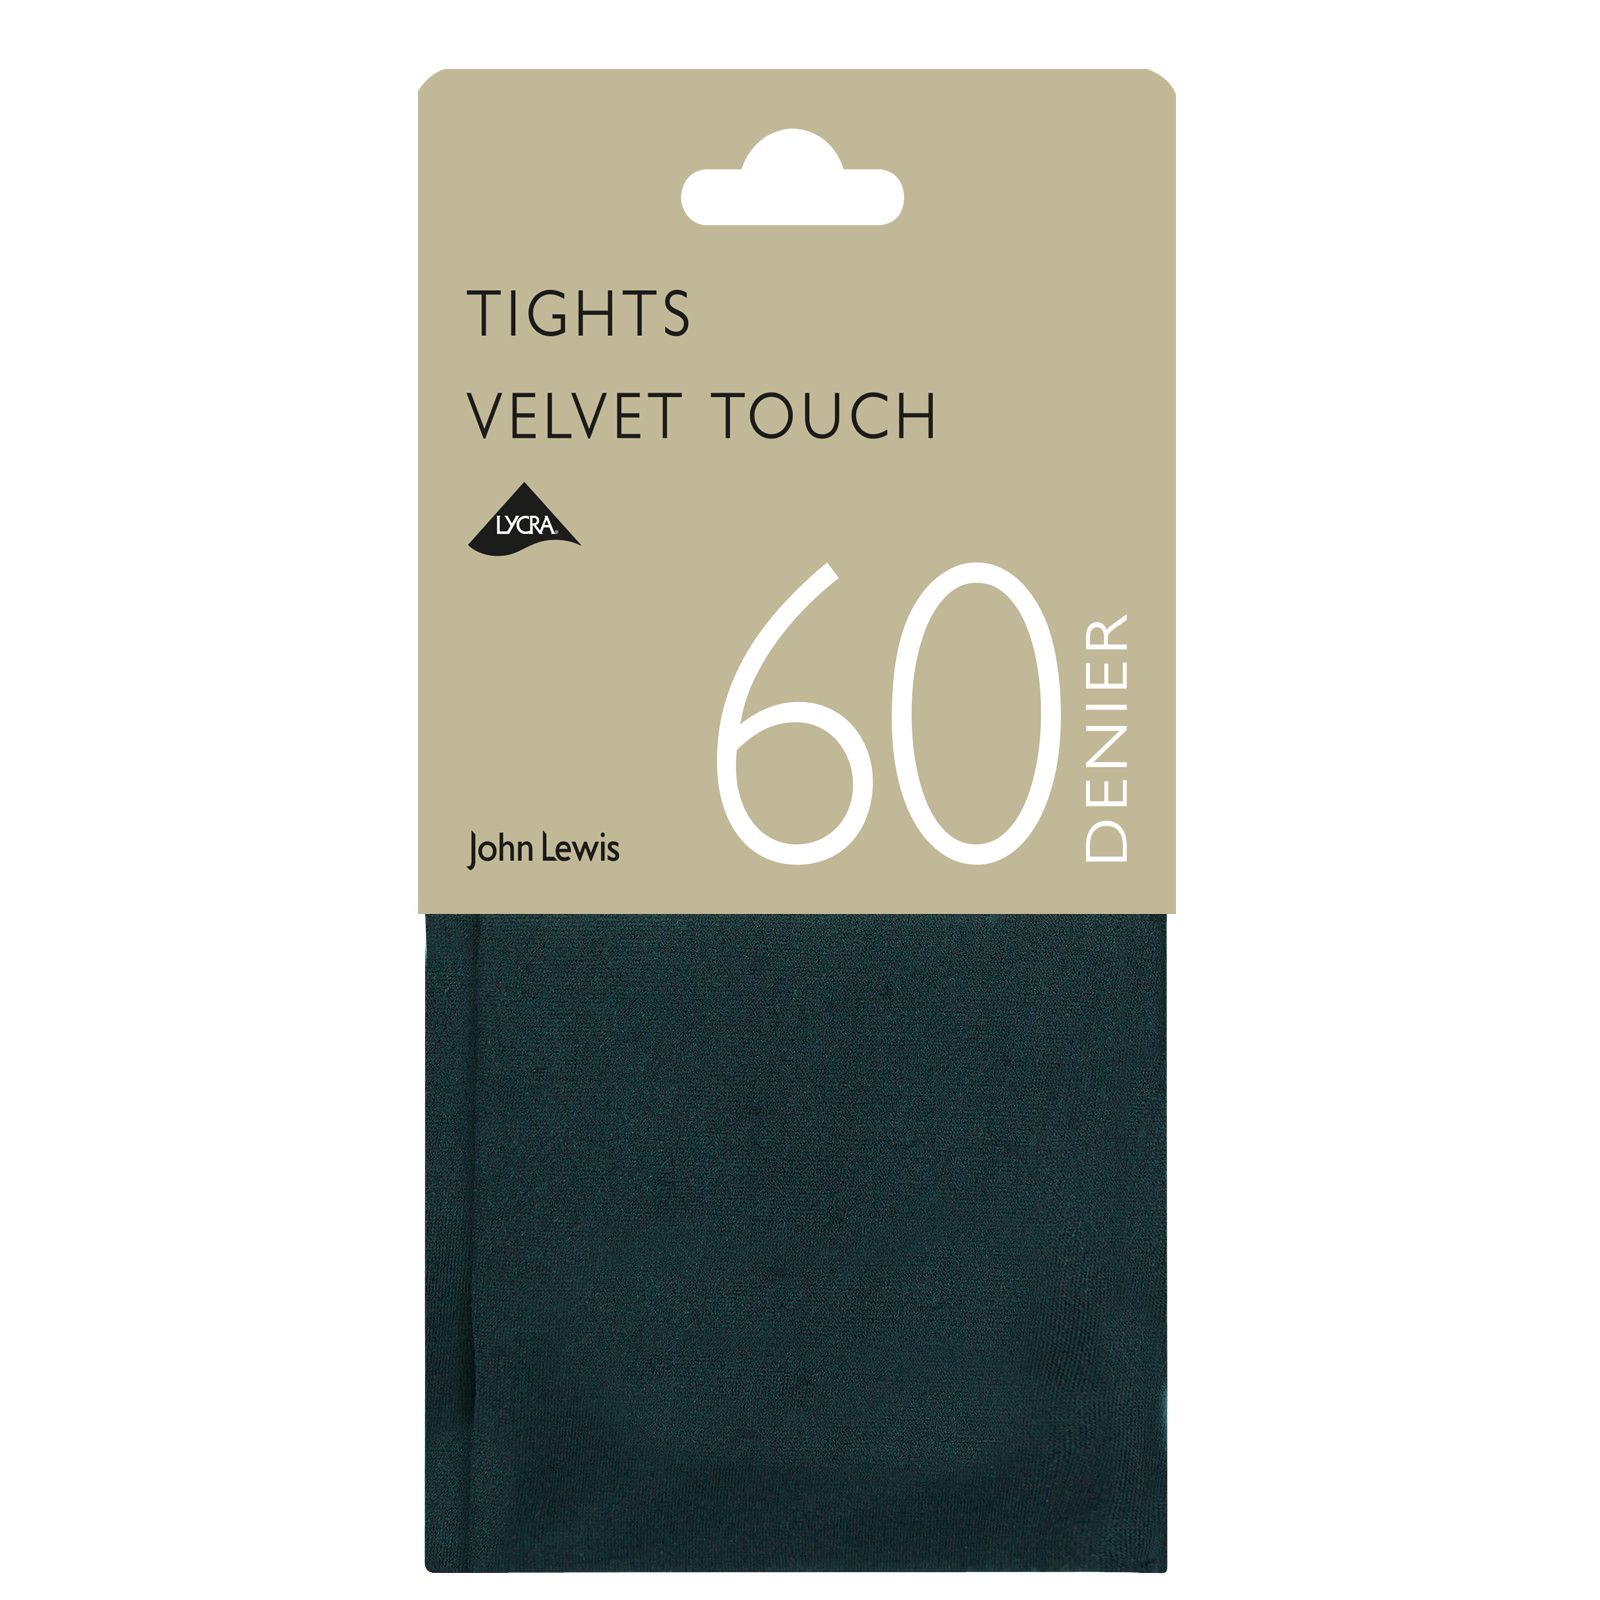 John Lewis & Partners 60 Denier Velvet Touch Opaque Tights, Green, M